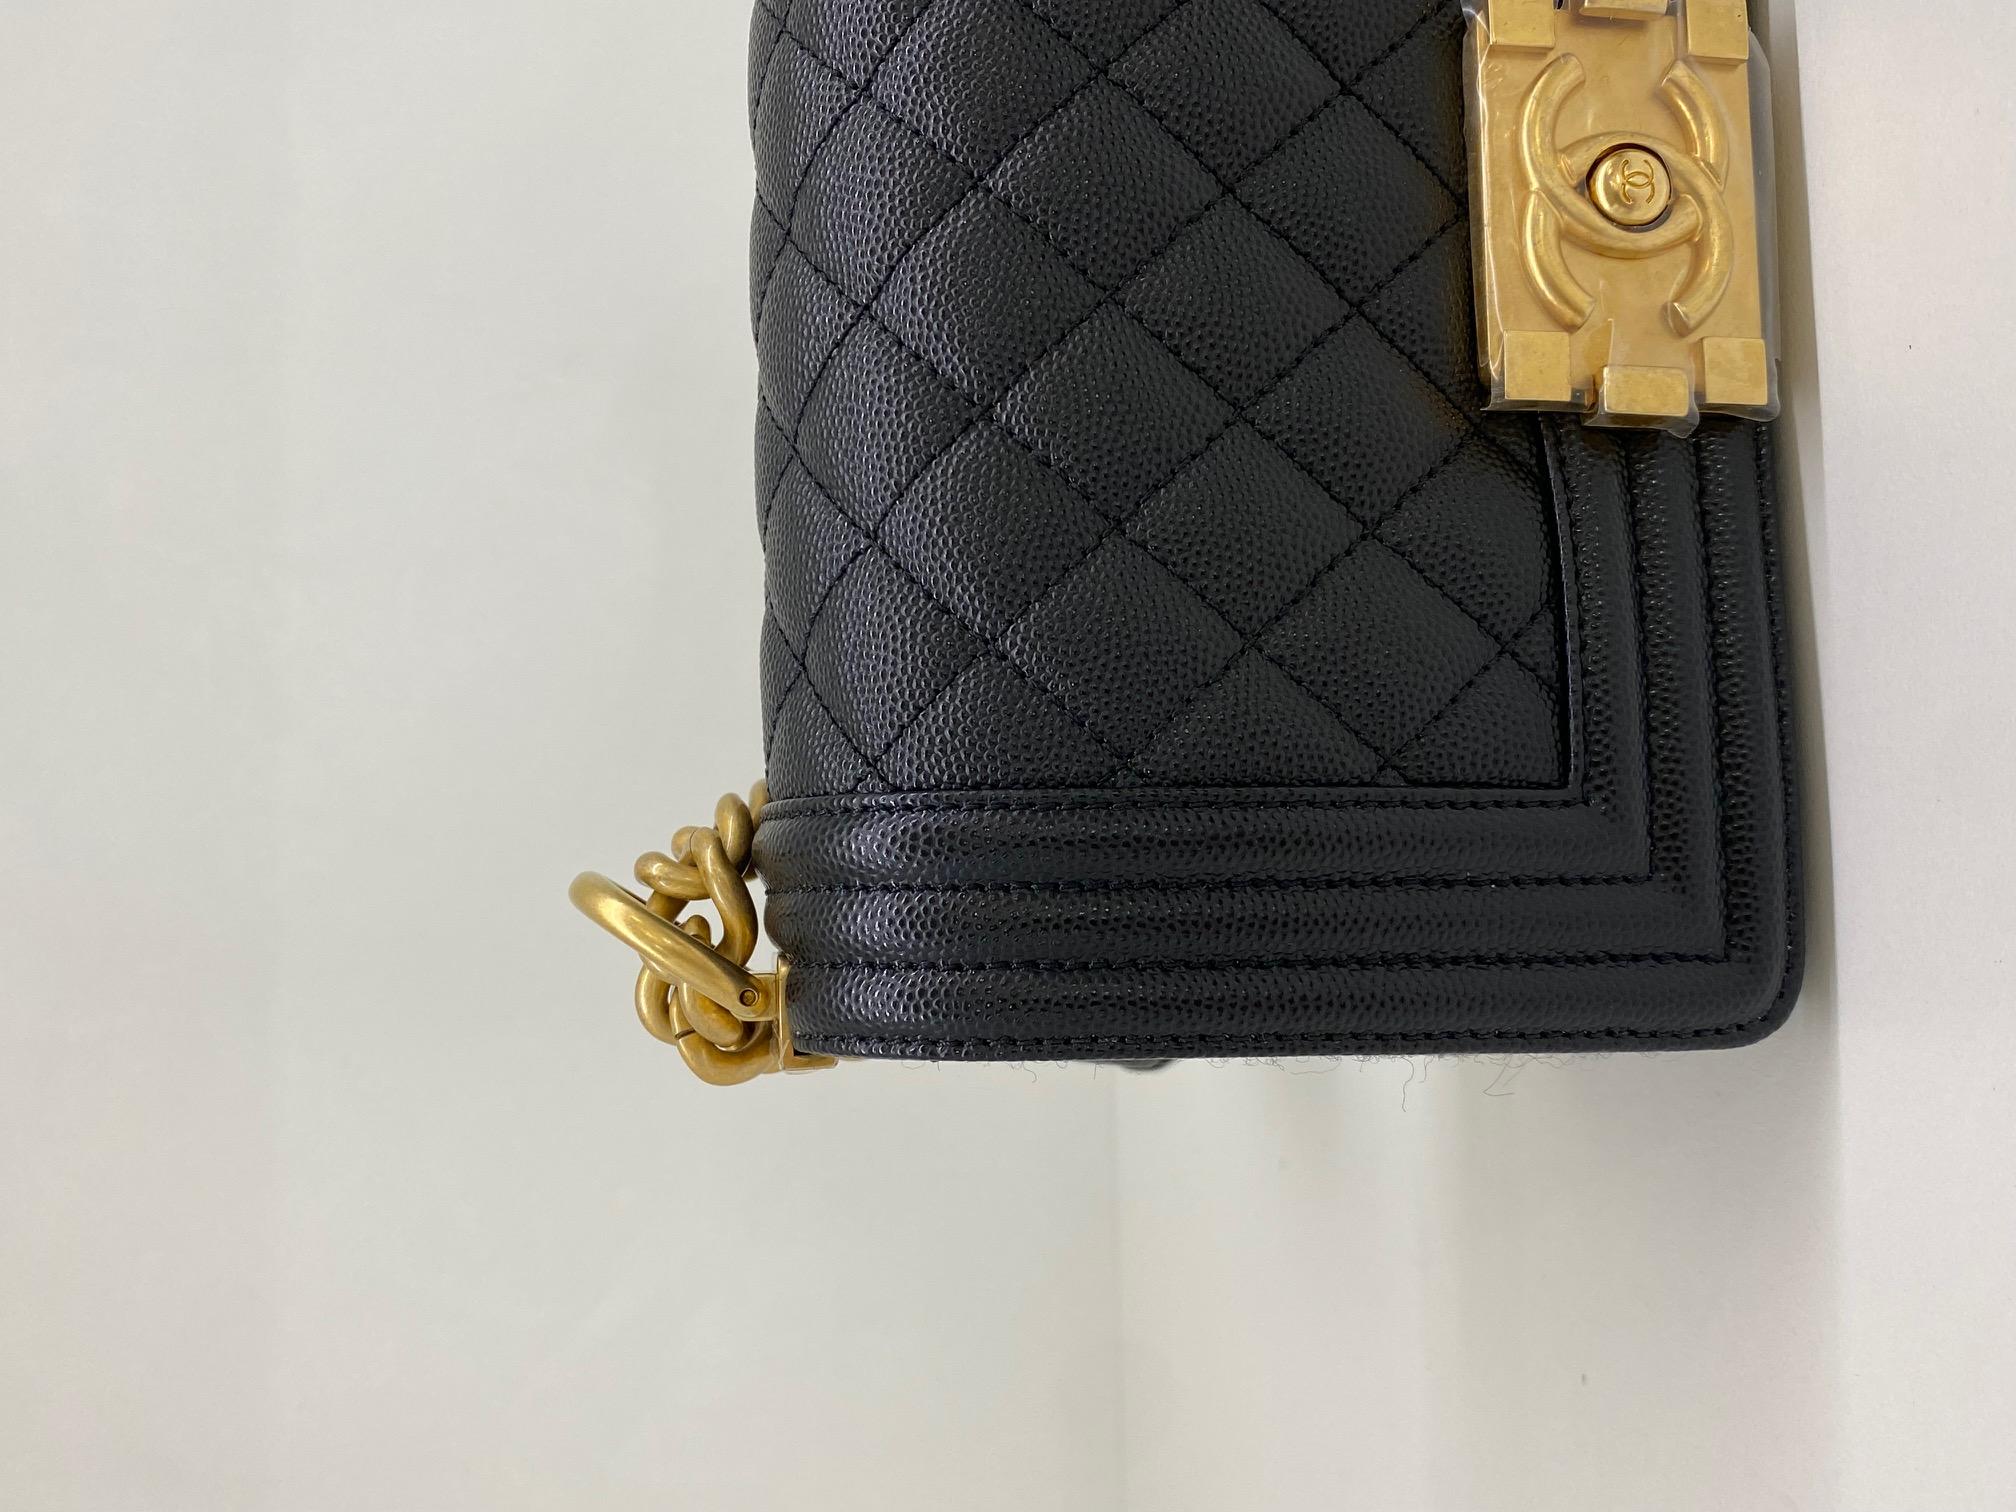 Chanel Boy Bag Small Black GHW For Sale 4